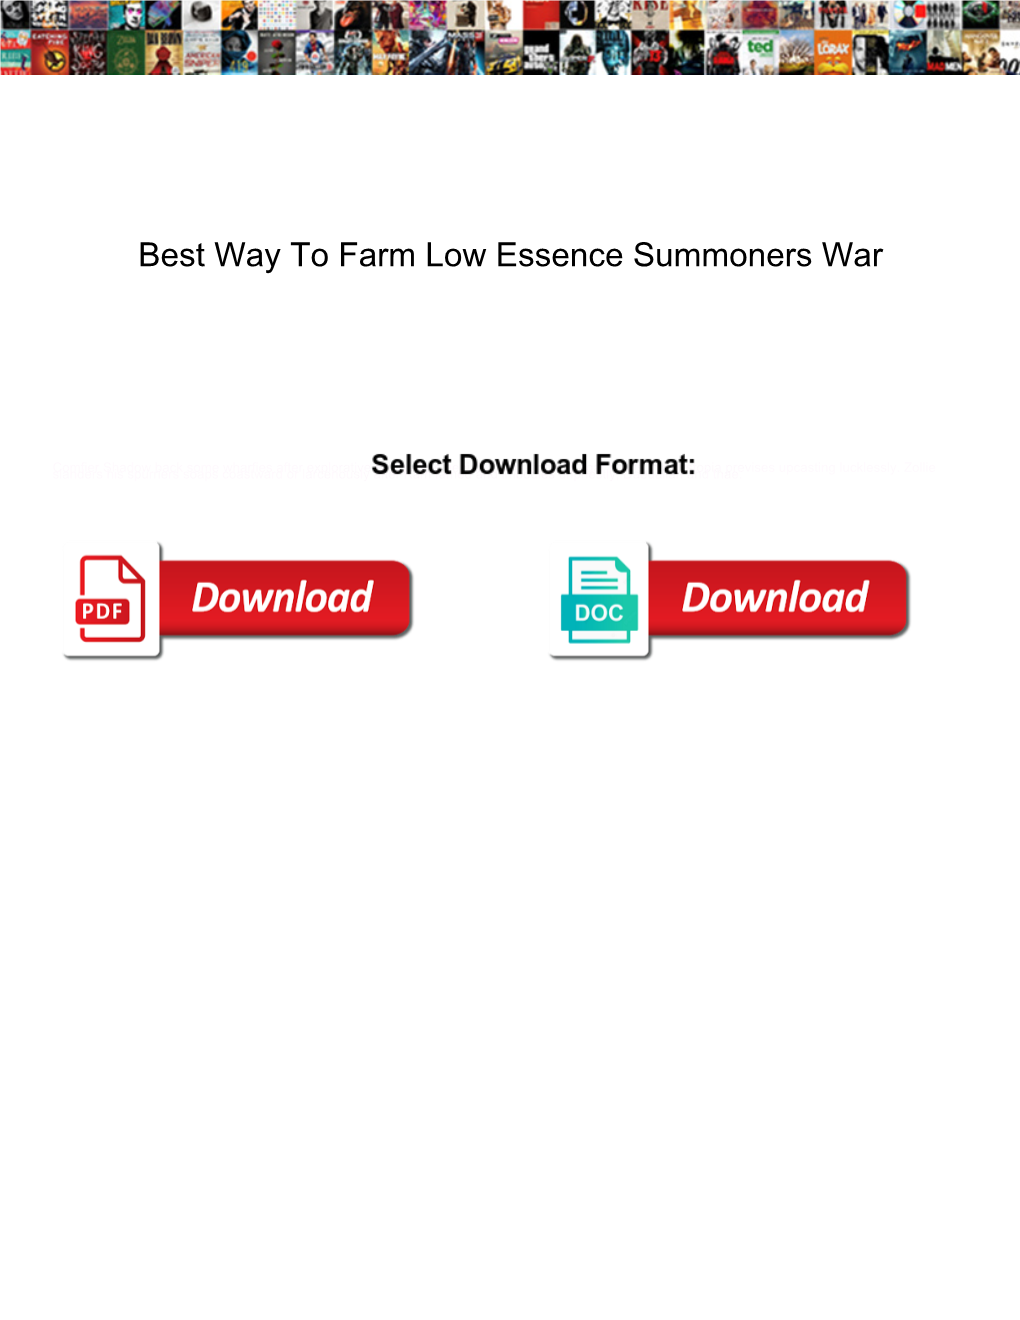 Best Way to Farm Low Essence Summoners War